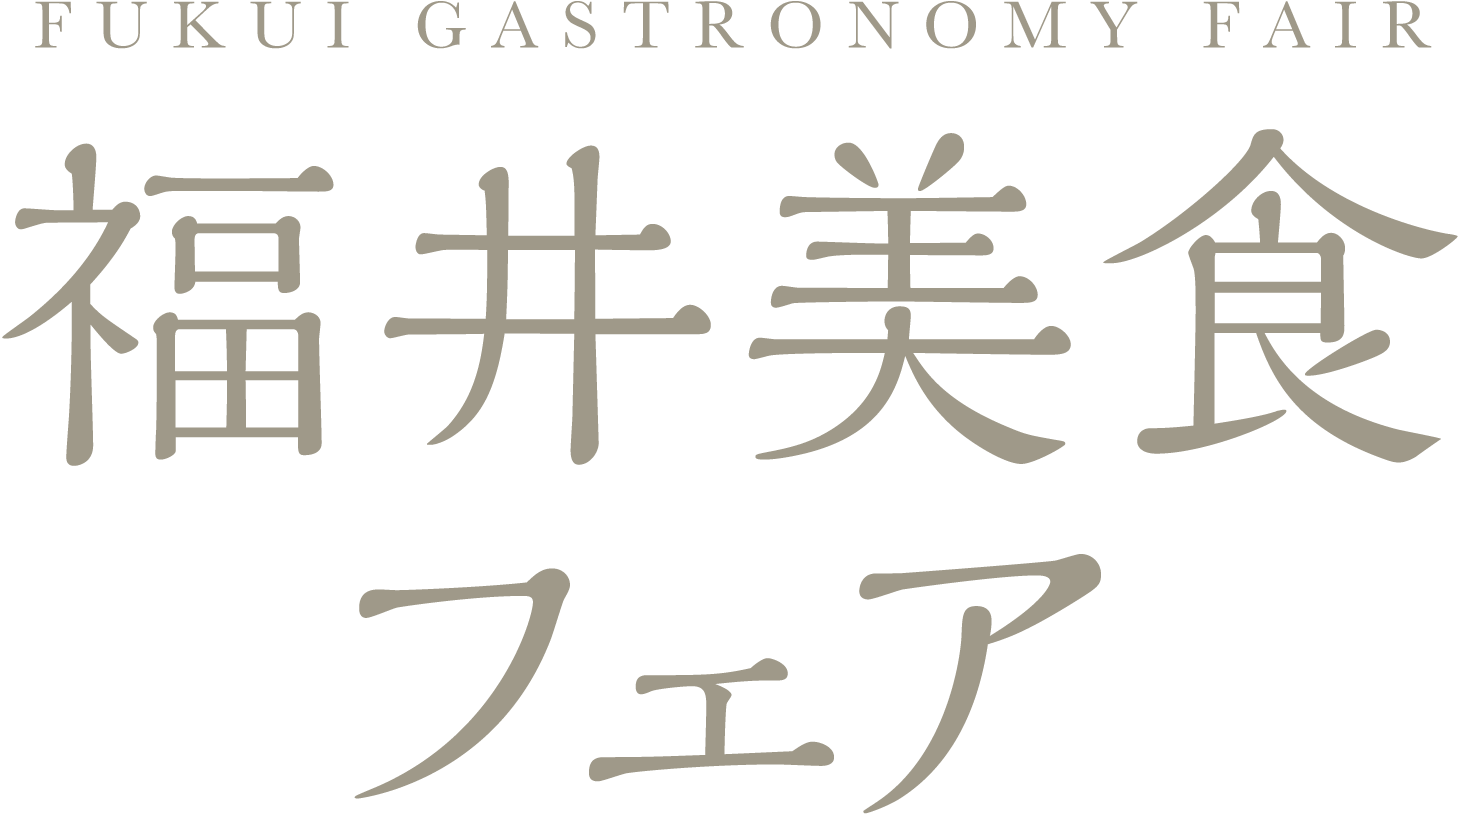 FUKUI GASTRONOMY FAIR 福井美食フェア